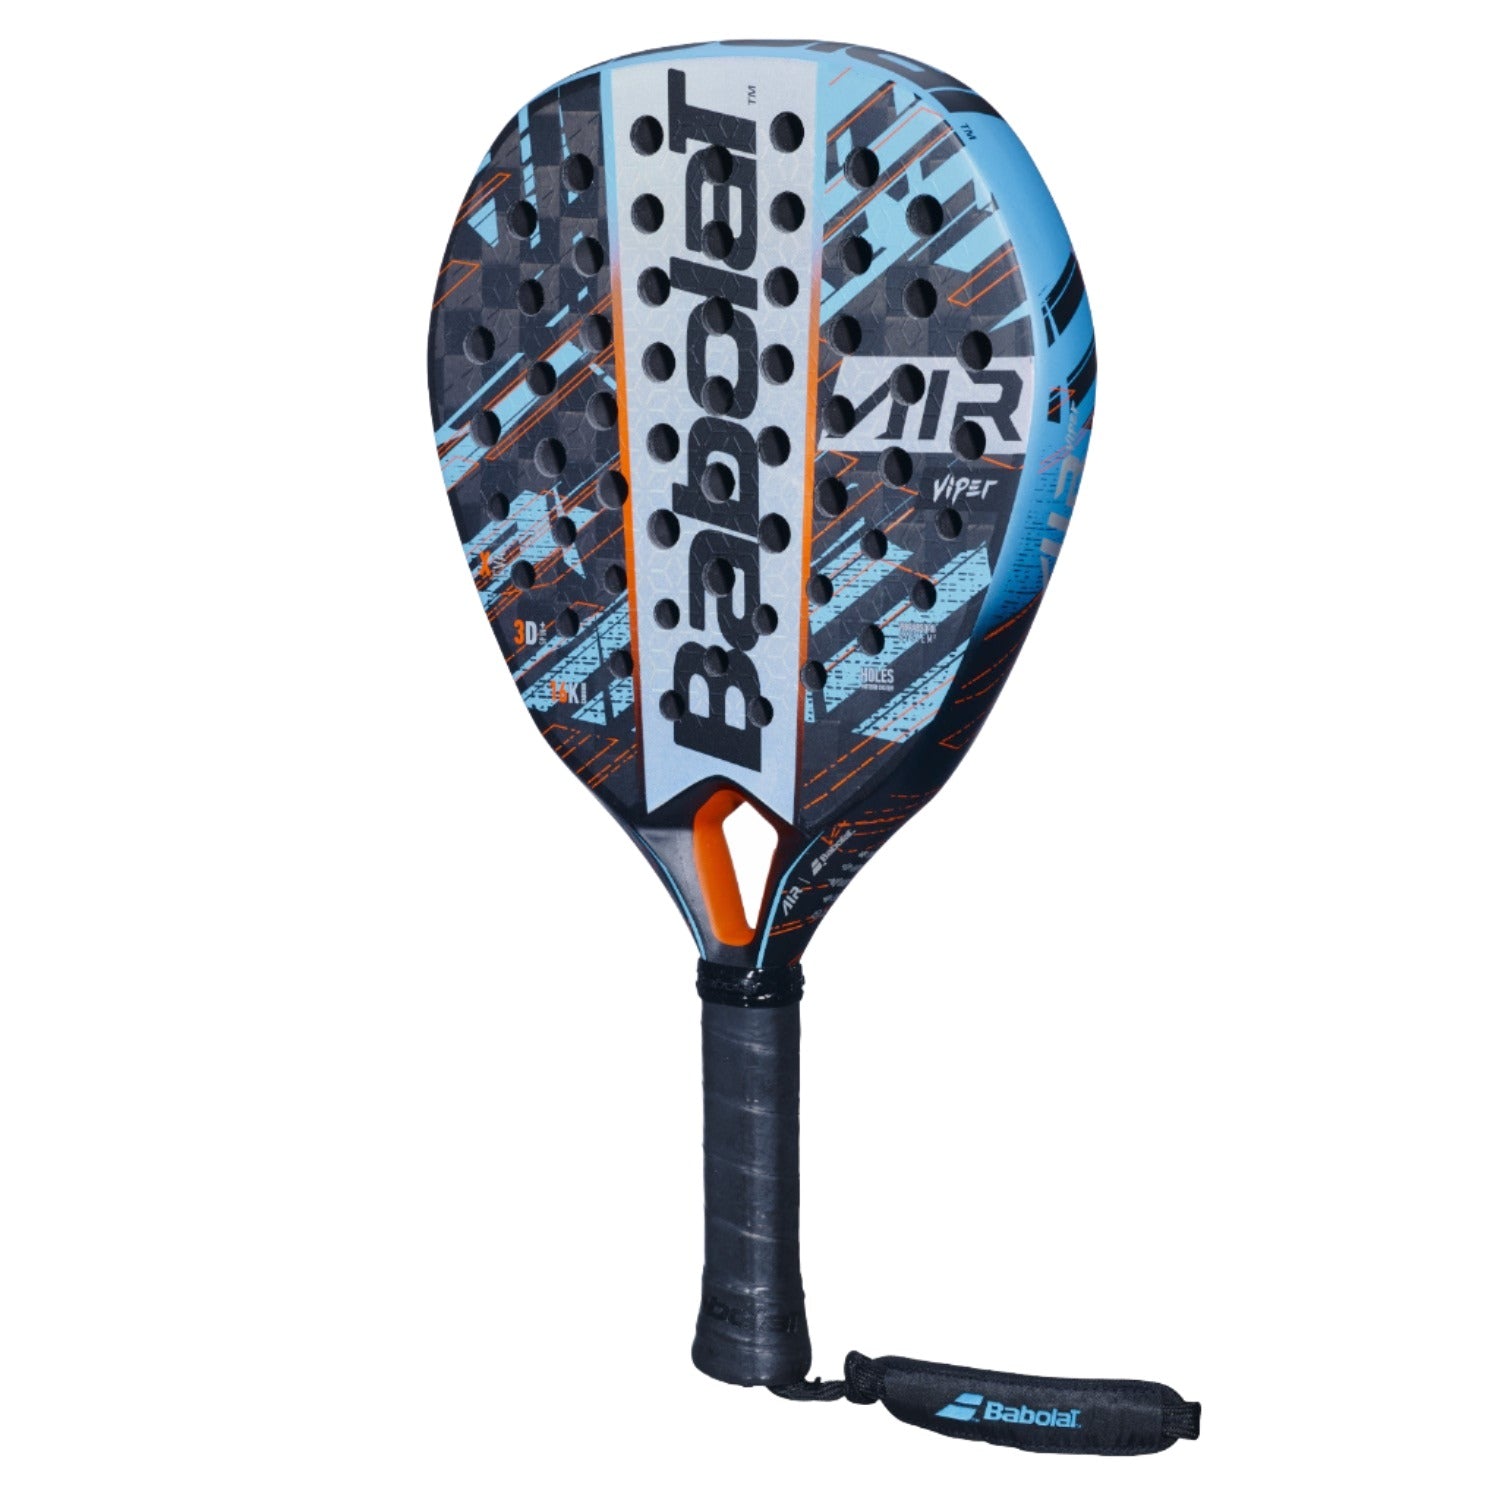 Main image of the Babolat Air Viper 2023 padel racket on sale at Thepadelshop.co.nz